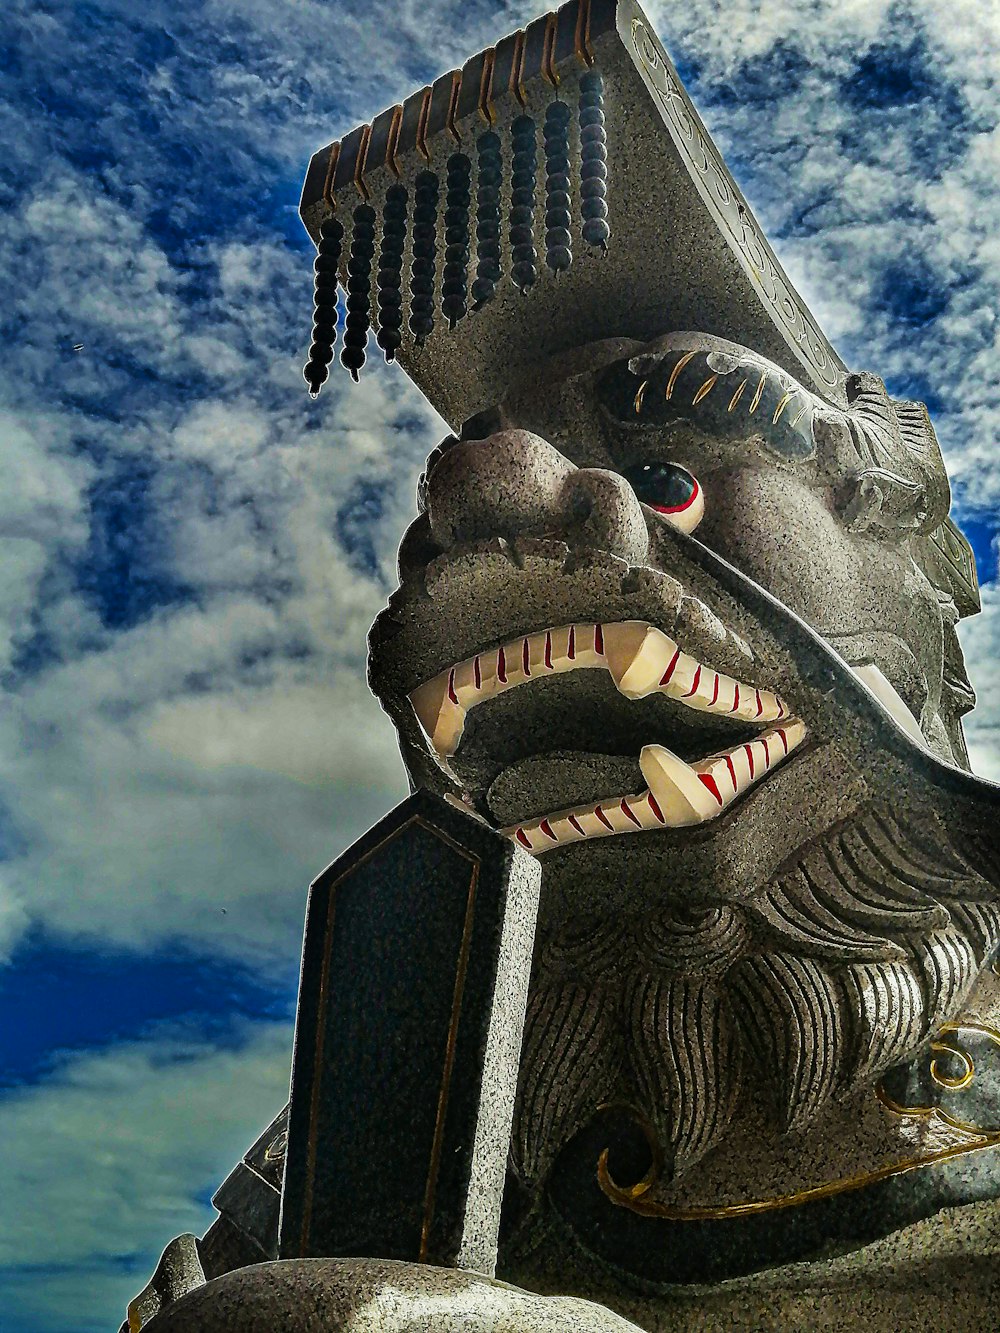 grey concrete dragon statue under blue sky during daytime